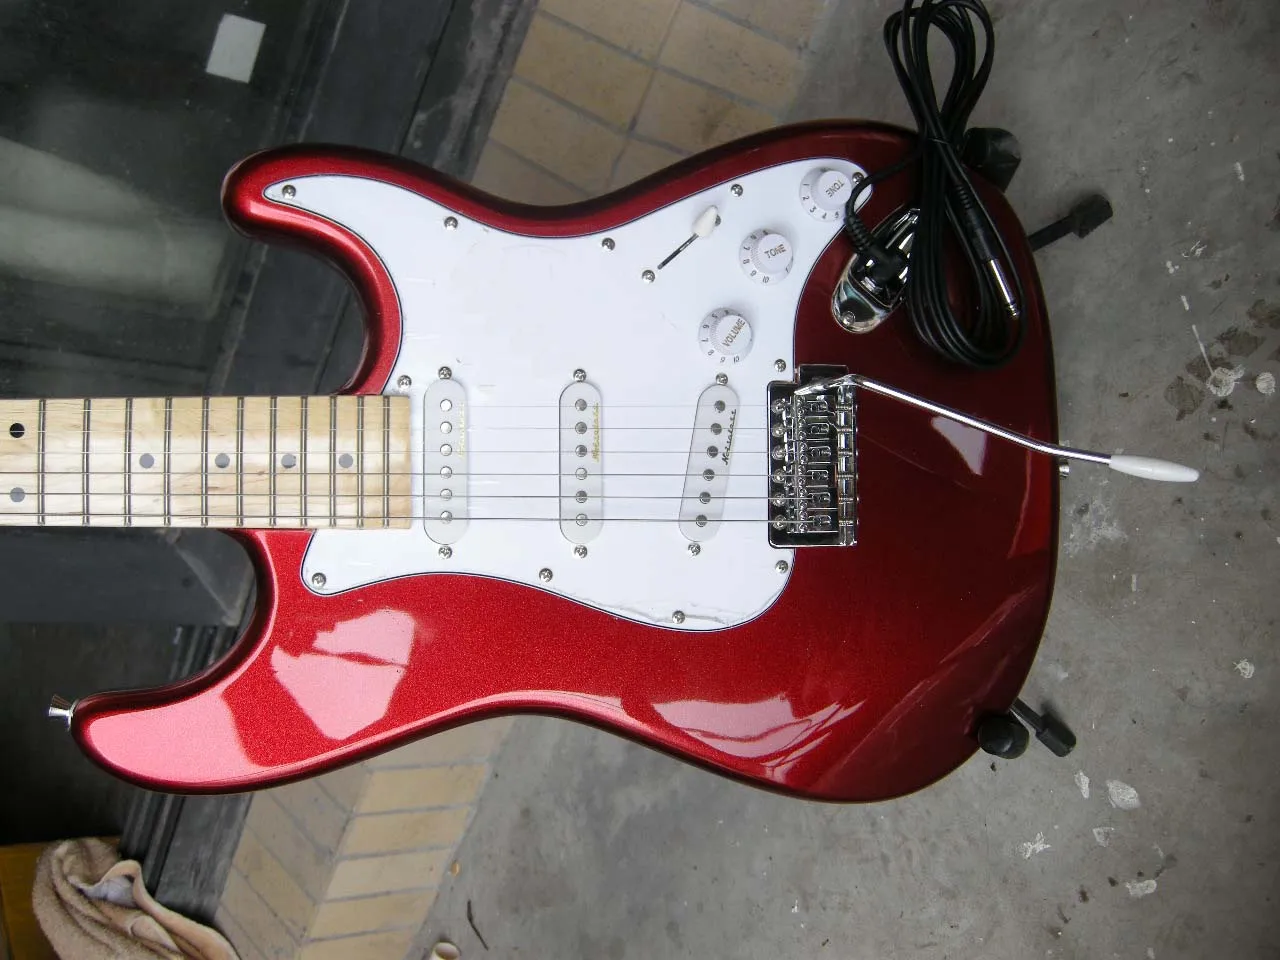 Gyári bolt piros fém test, juhar fogólap, ST 6 strings elektromos gitár 8yue31